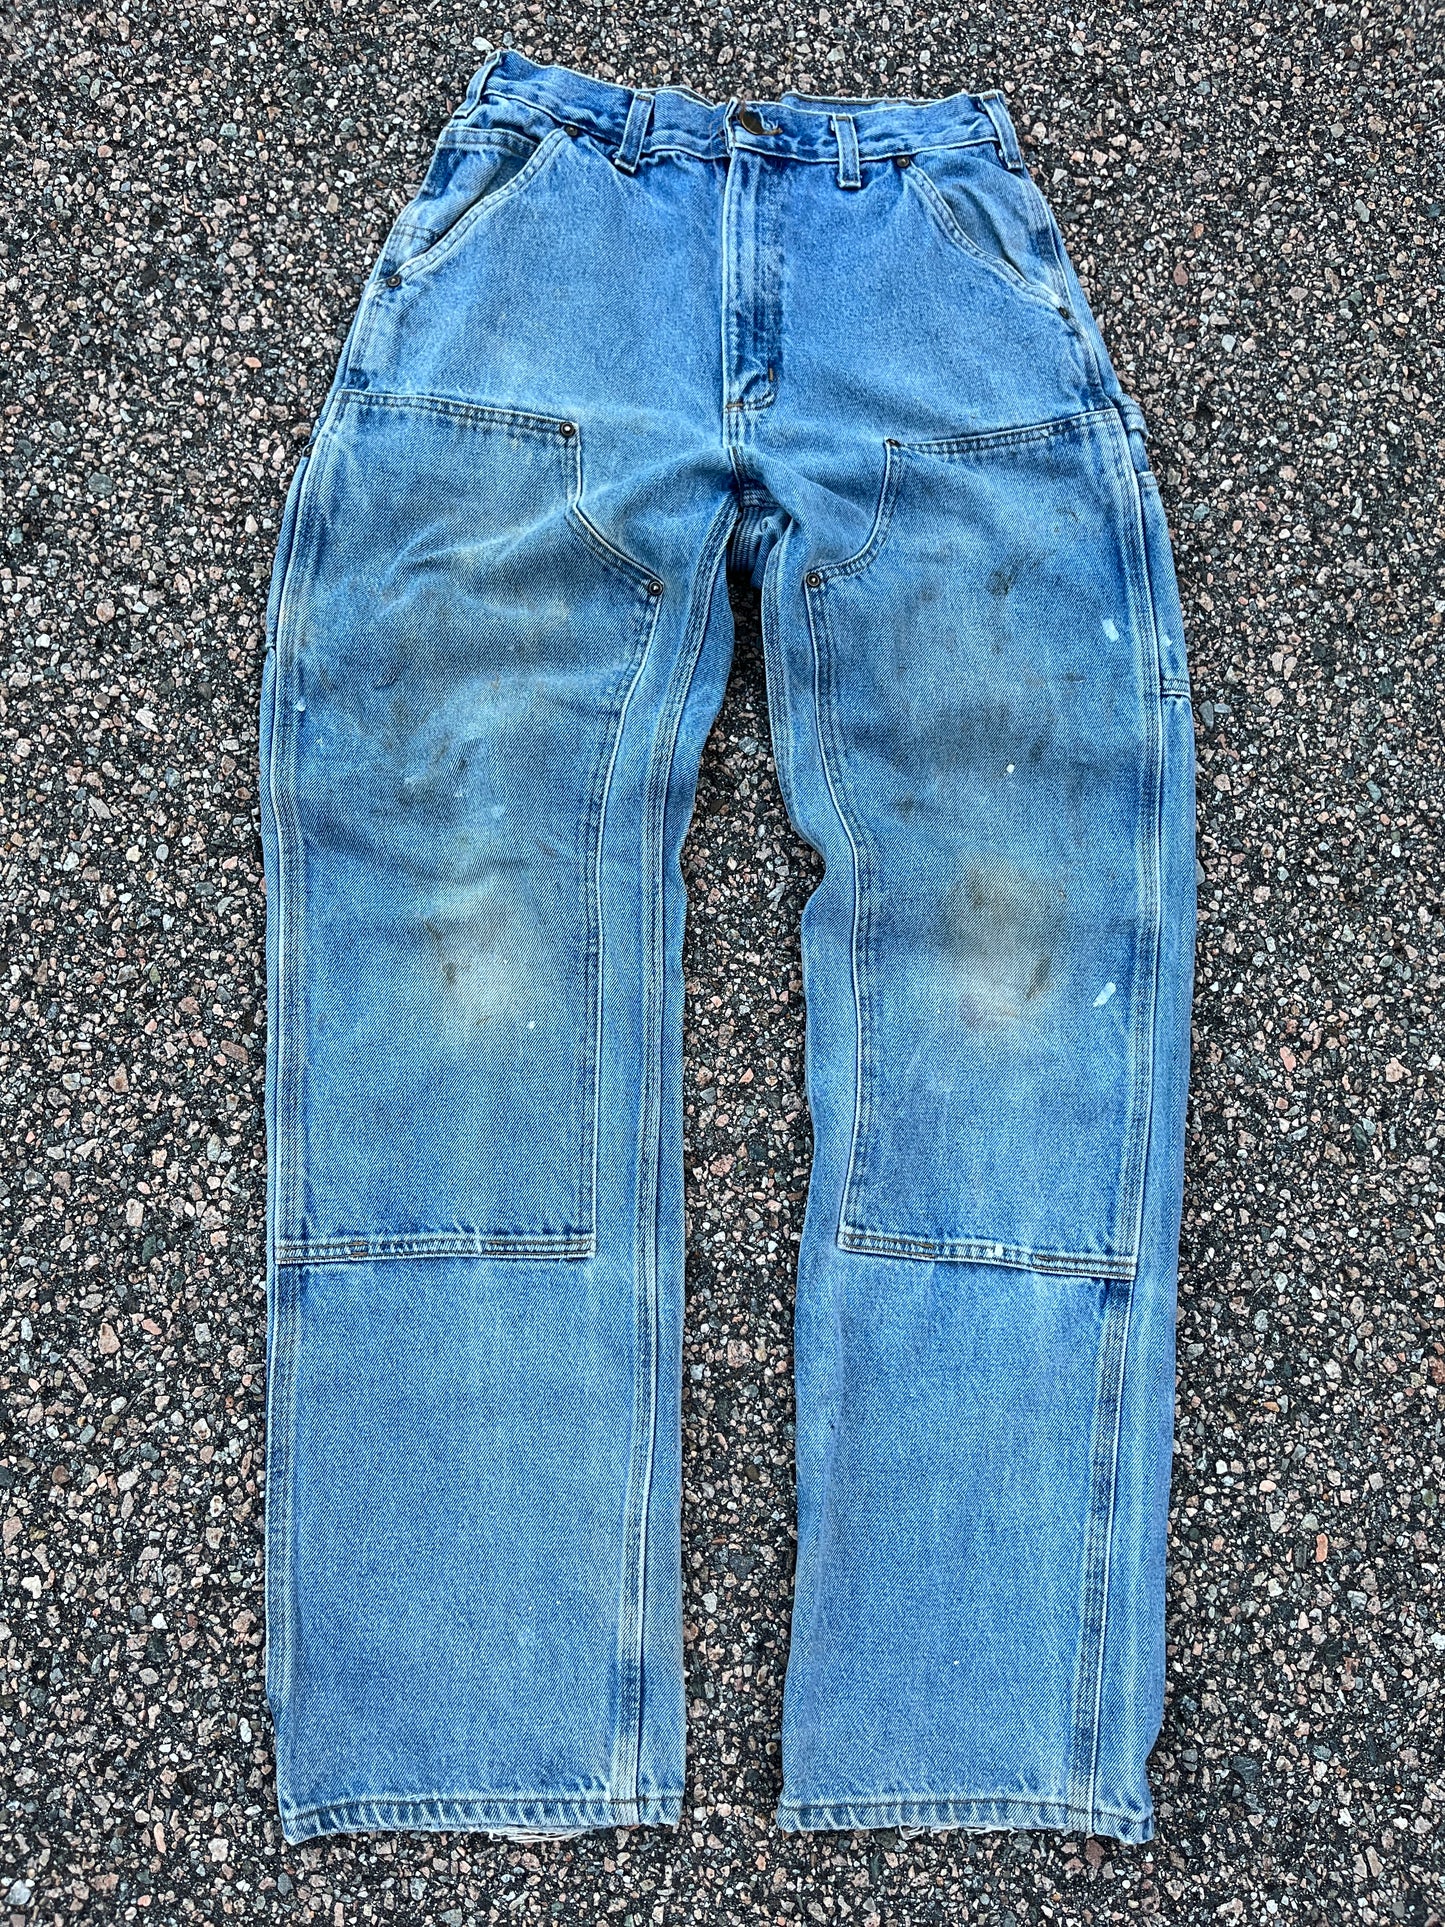 Faded Denim Carhartt Double Knee Pants - 30 x 34